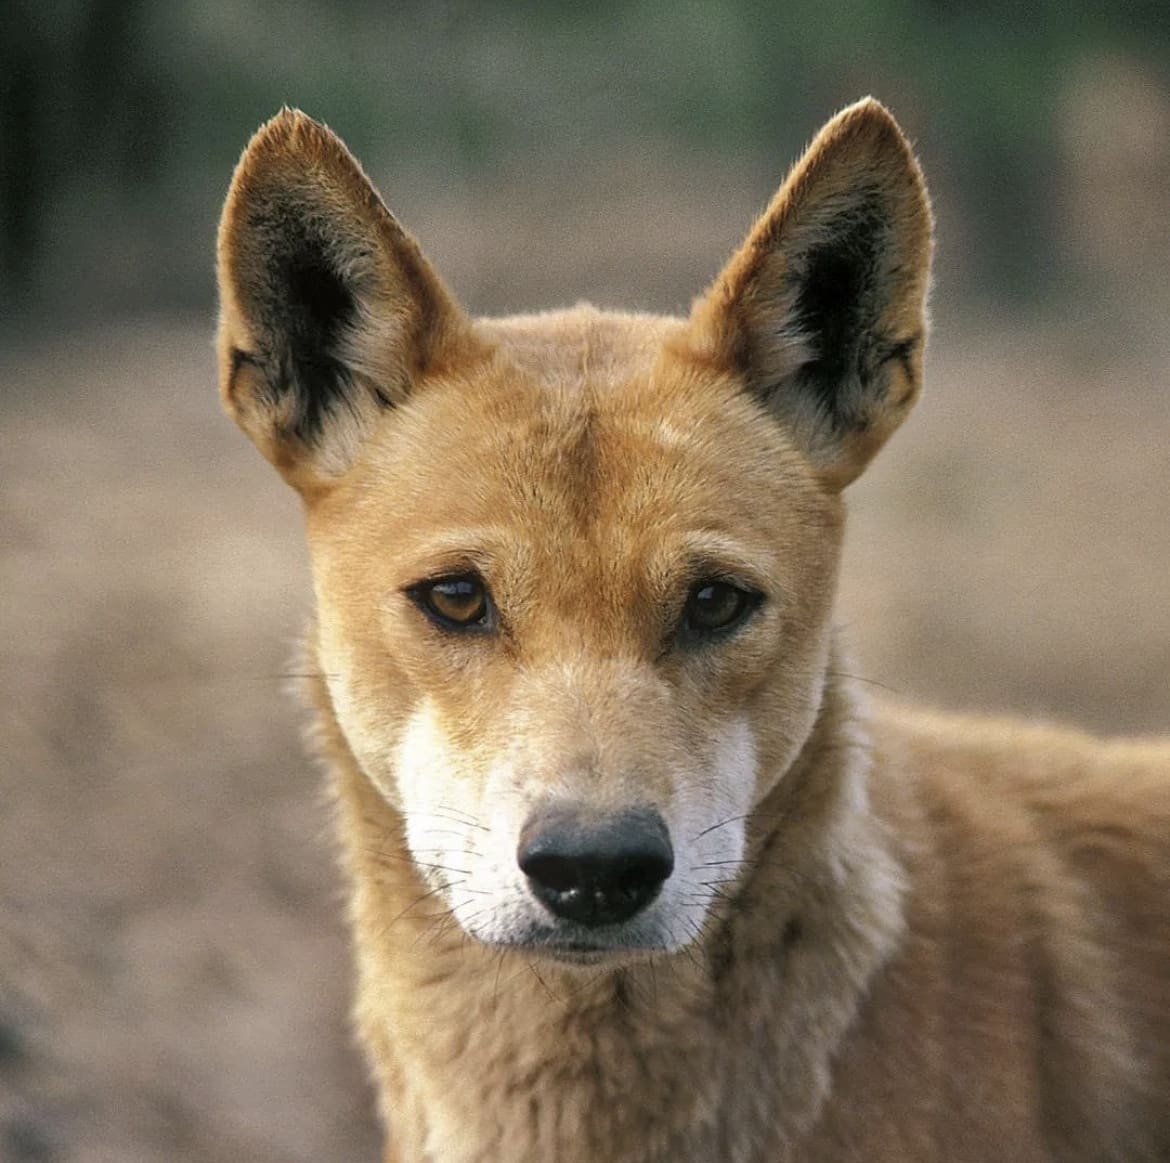 Wild Dingo in Australia